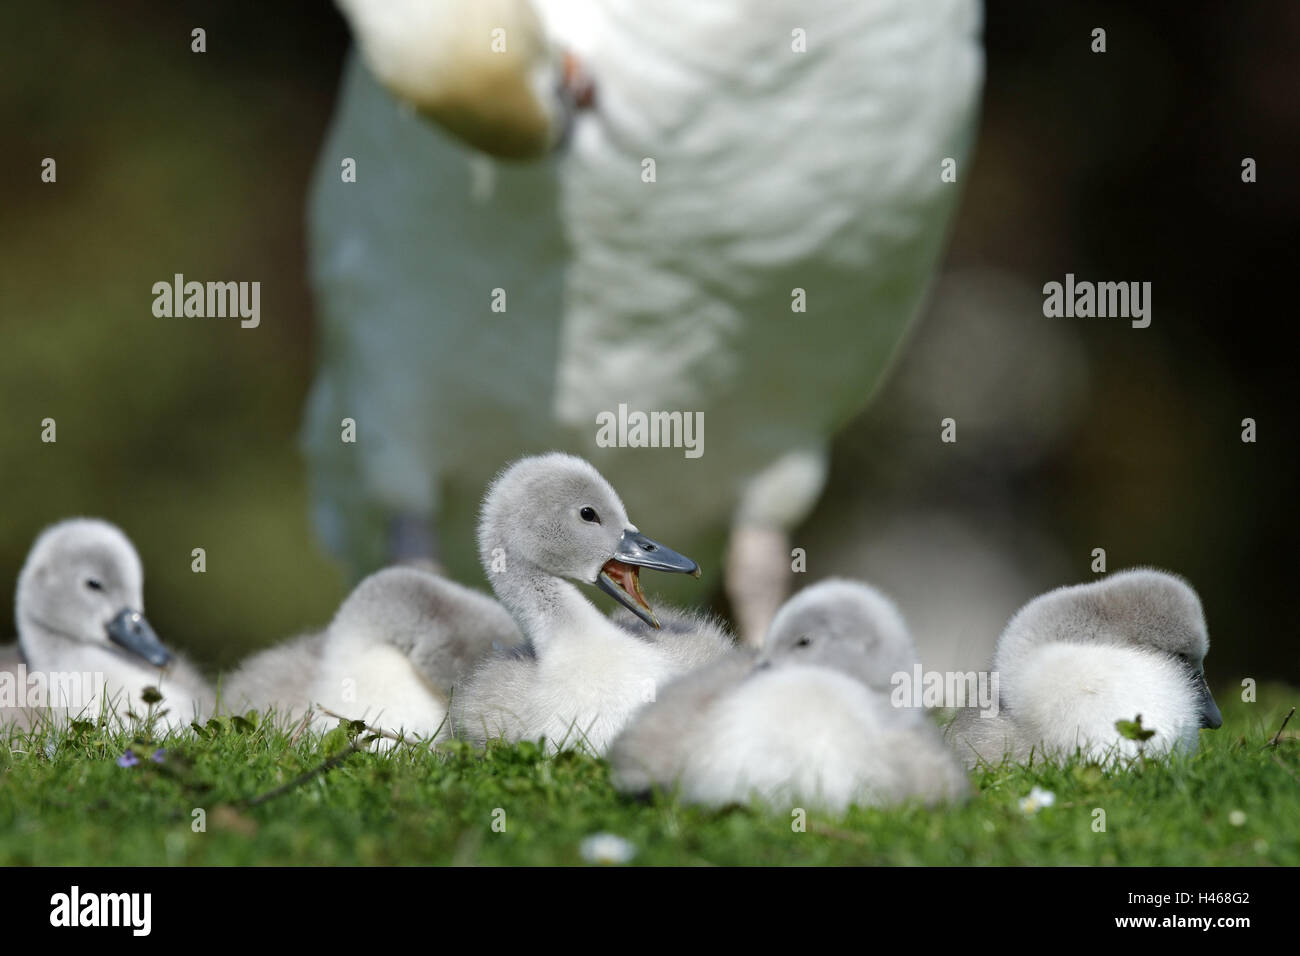 Hump swan, Cygnus olor, mother animal, fledgling, meadow, old animal, animal babies, animals, bird species, duck's birds, swans, swan fledglings, group, sleep, rest, nature, Stock Photo